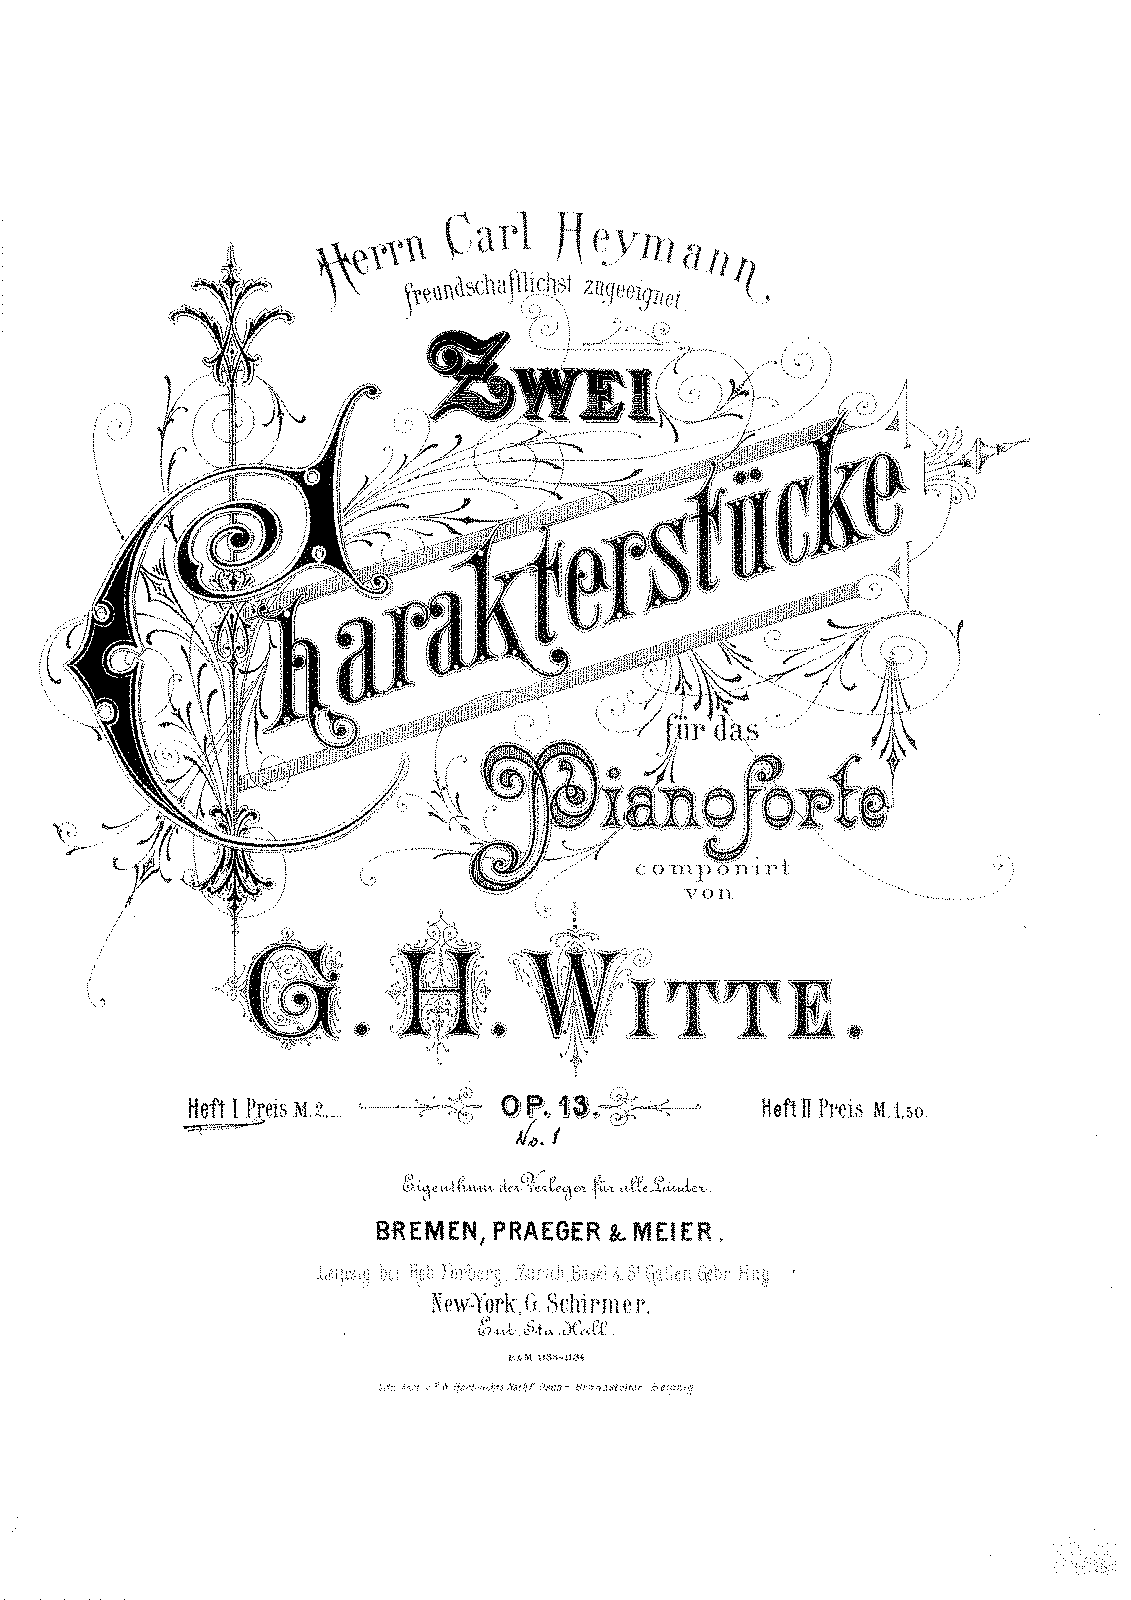 2 Charakterstücke, Op.13 (Witte, George Hendrik) - IMSLP